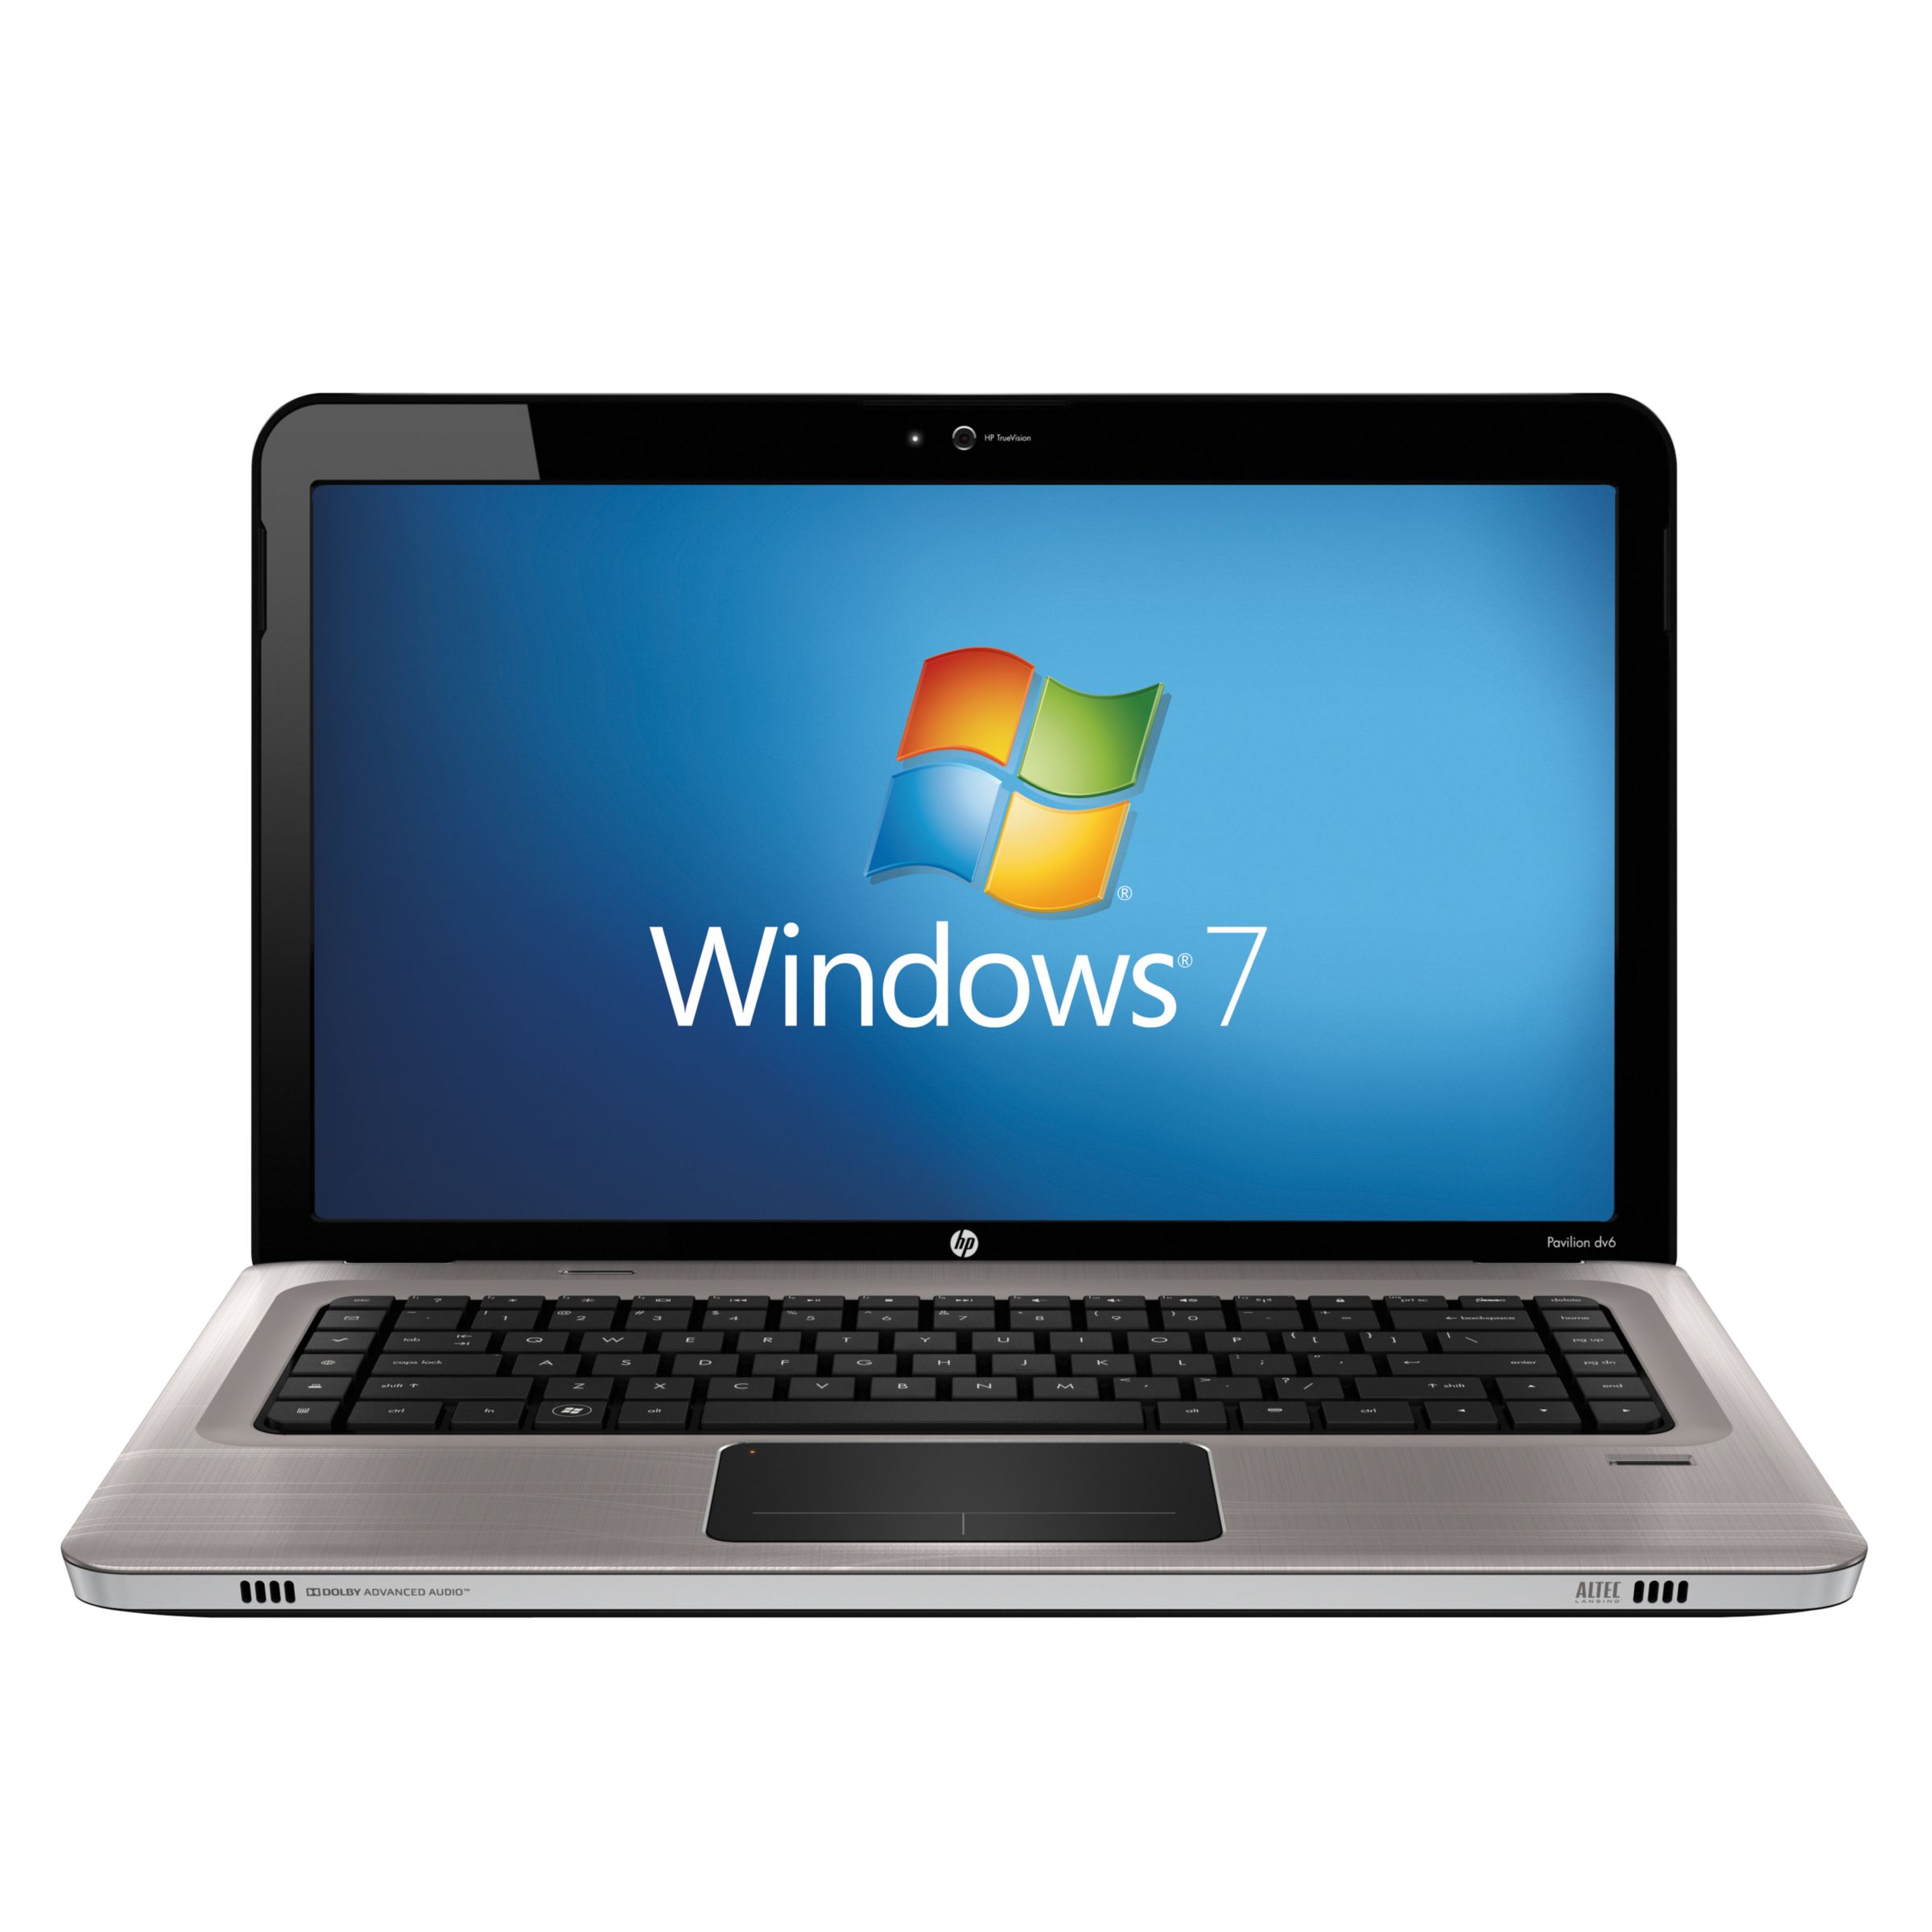 HP Pavilion DV6-3180EA Laptop, Intel Core i7, 500GB, 1.6GHz, 4GB RAM with 15.6 Inch Display at John Lewis